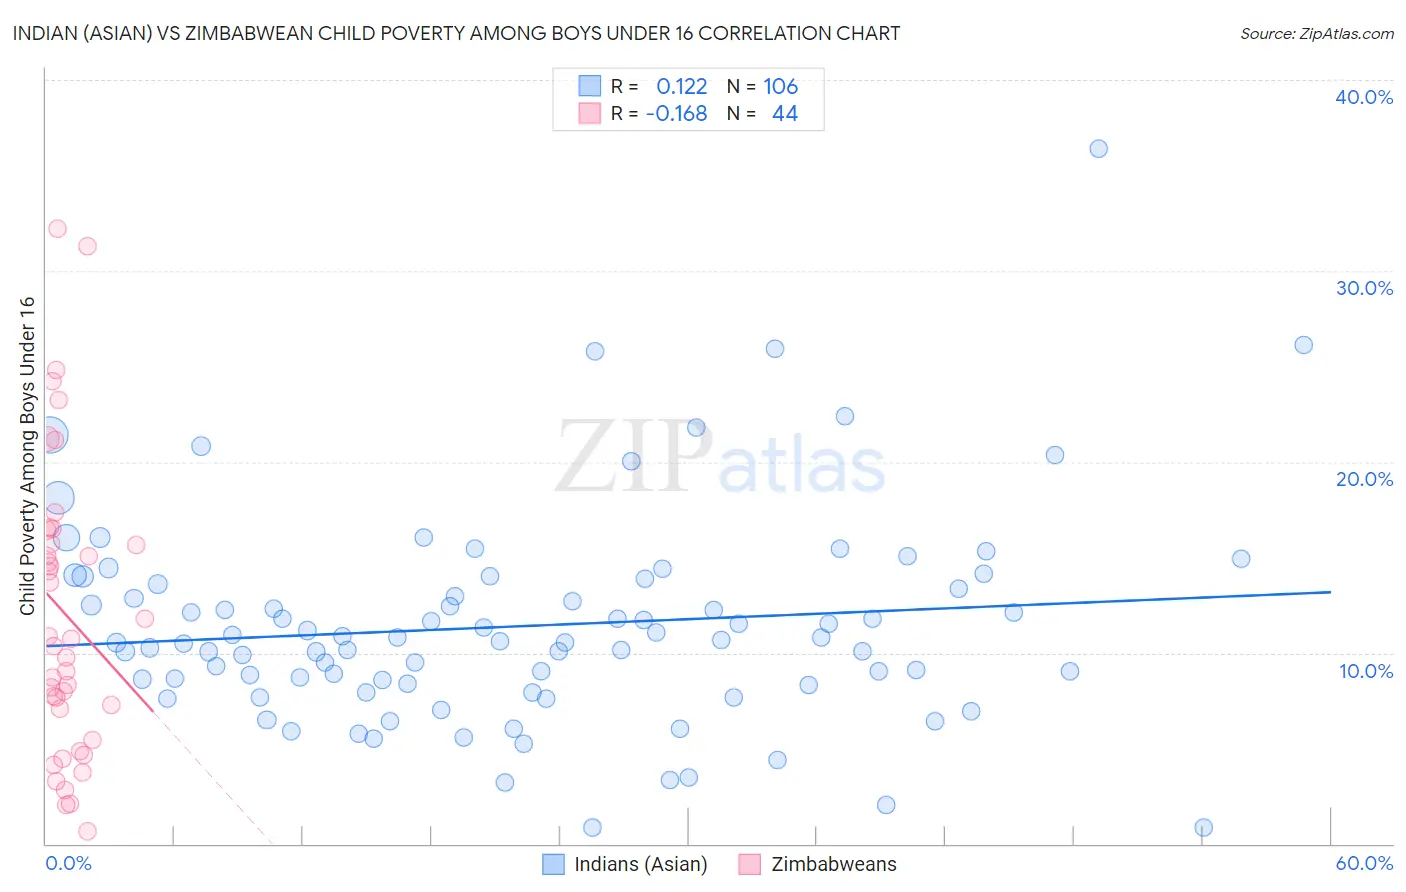 Indian (Asian) vs Zimbabwean Child Poverty Among Boys Under 16